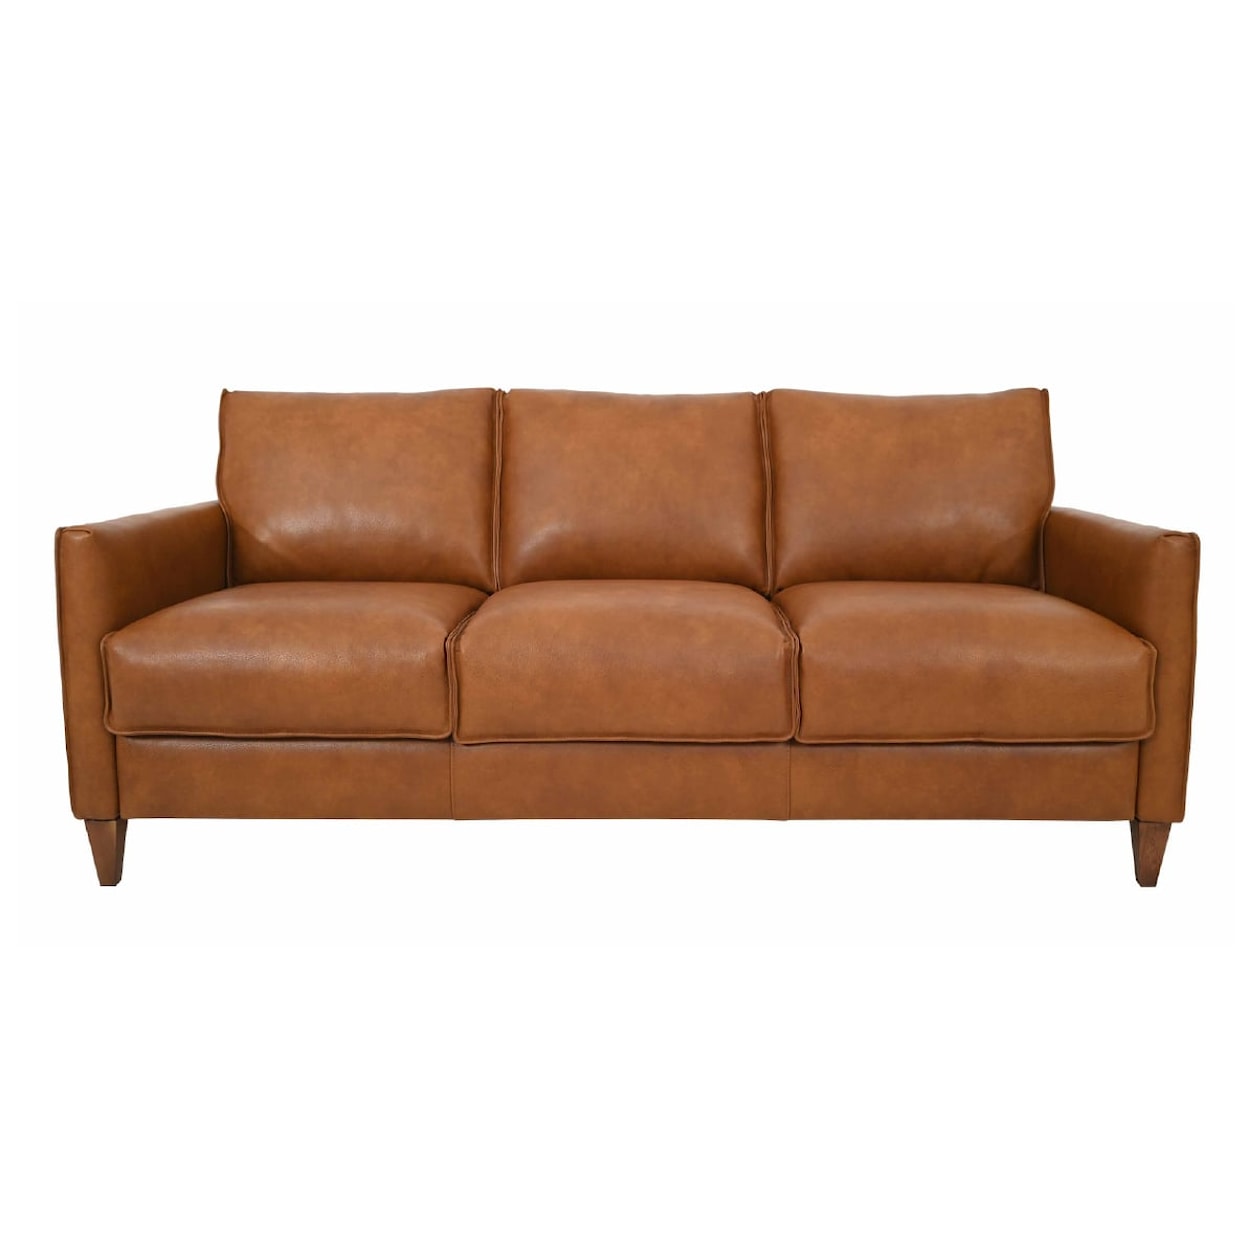 Virginia Furniture Market Premium Leather Bergamo Italian Leather Sleeper Sofa